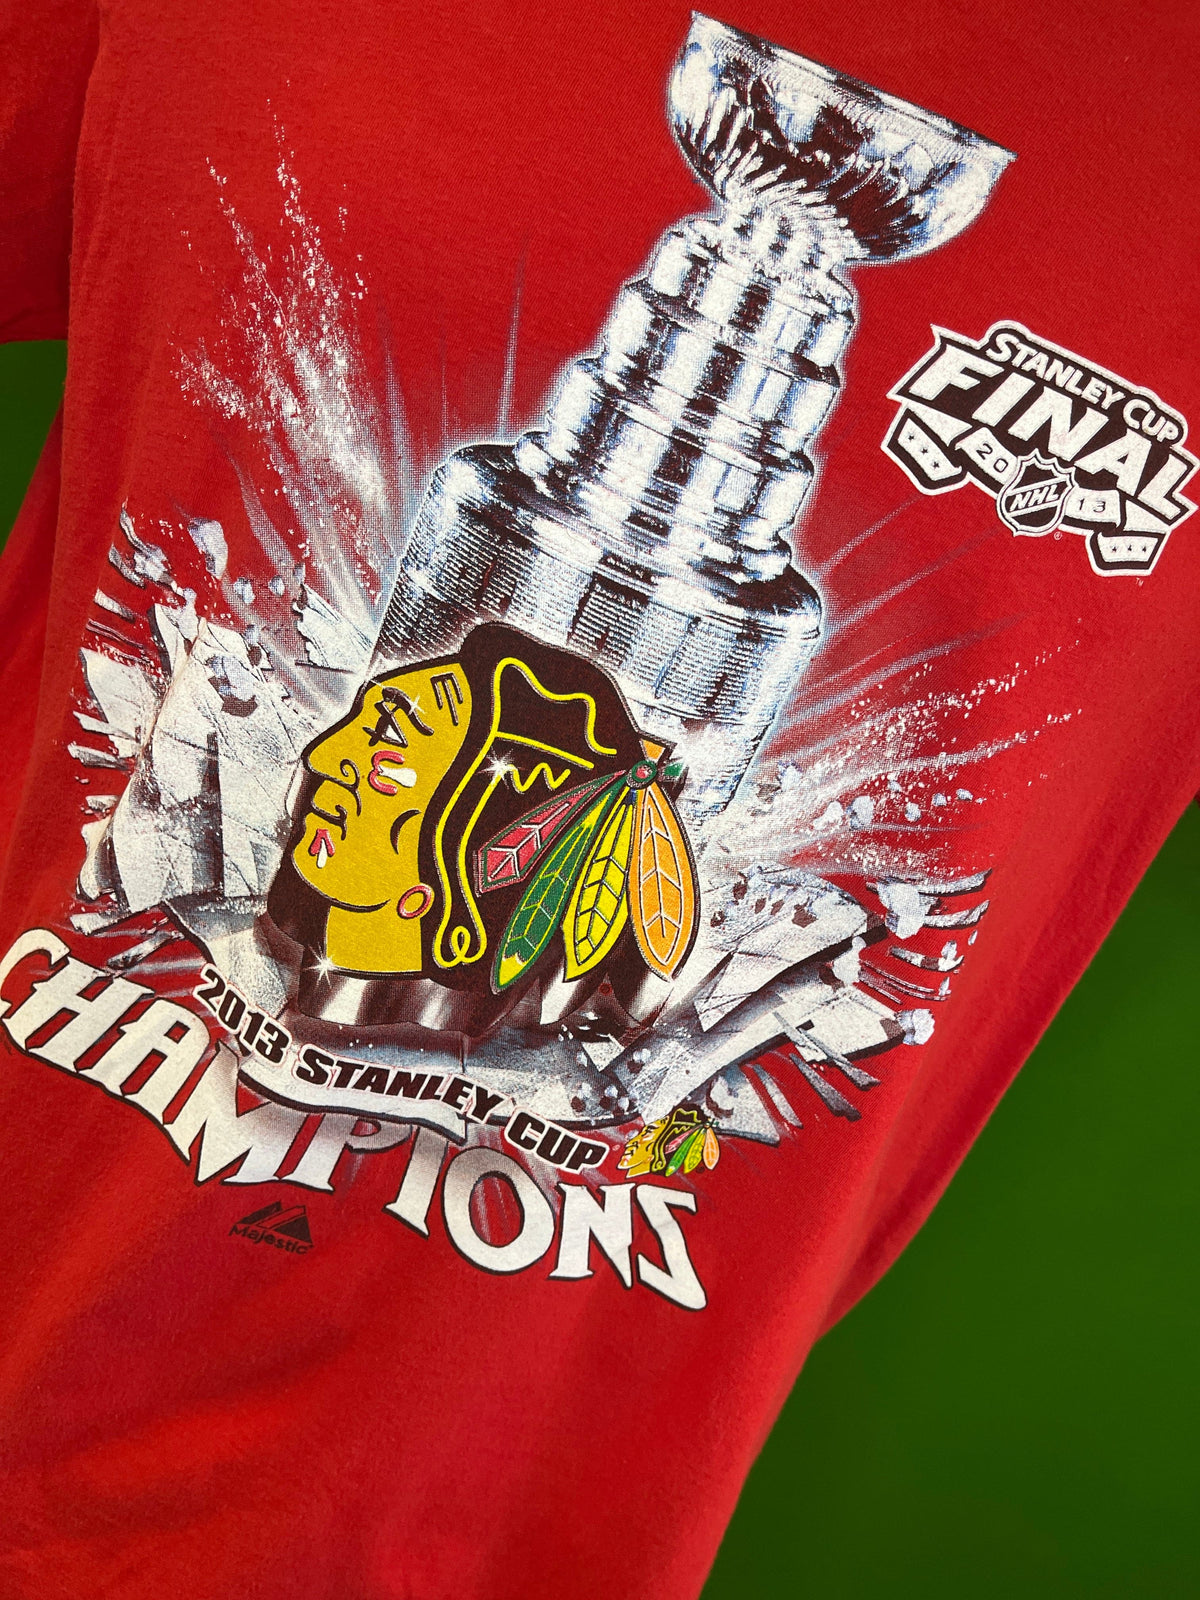 NHL Chicago Blackhawks Majestic 2013 Stanley Cup Champions T-Shirt Men's Medium